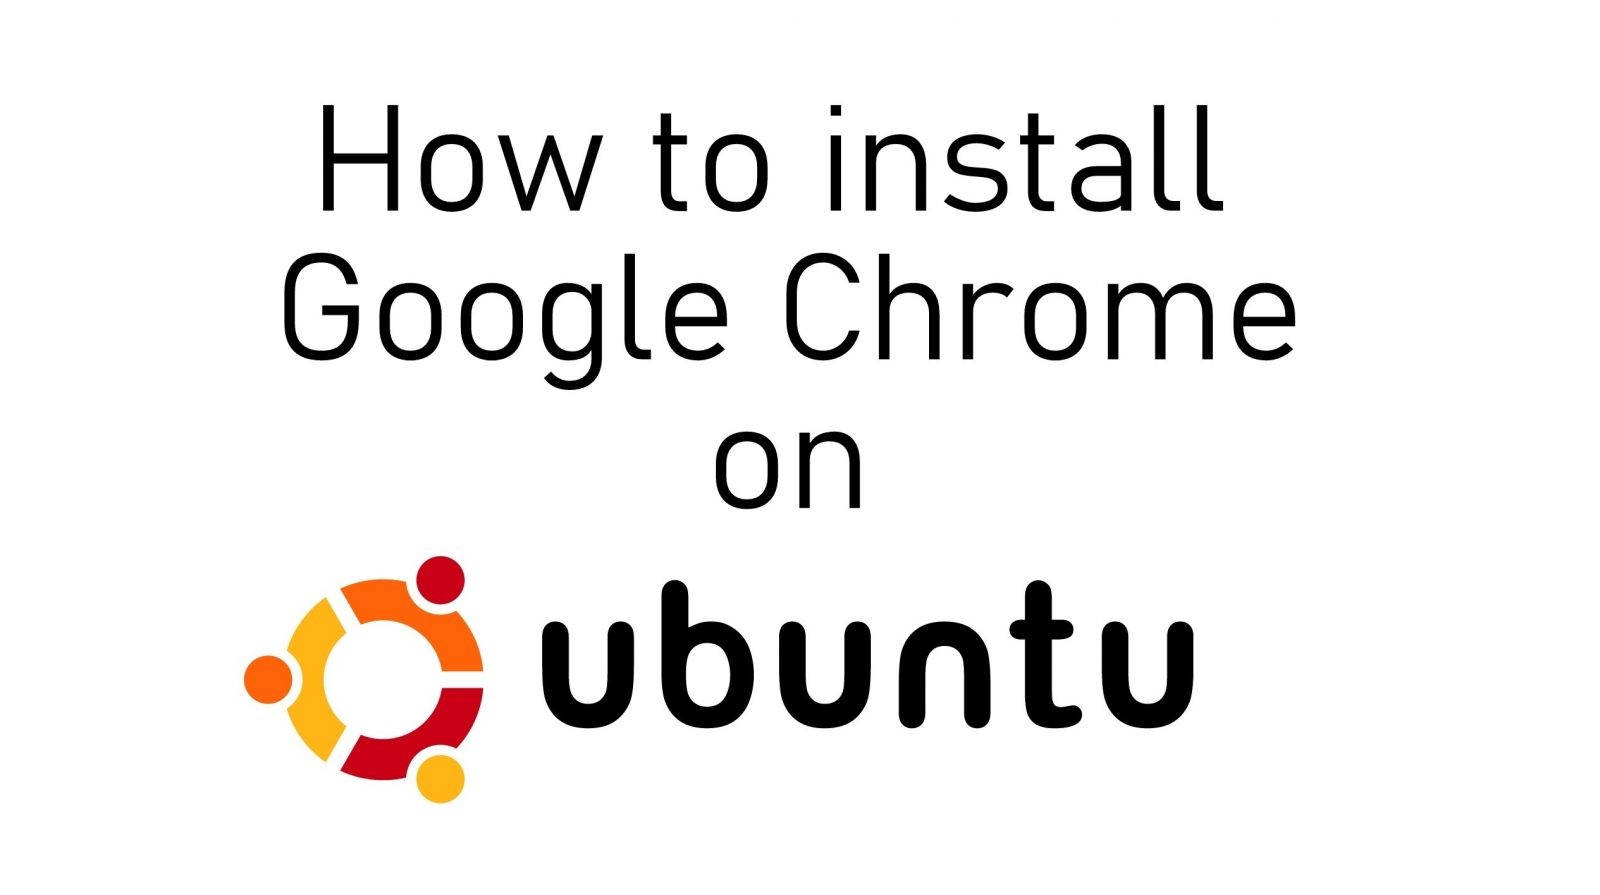 install google chrome ubuntu 22.04